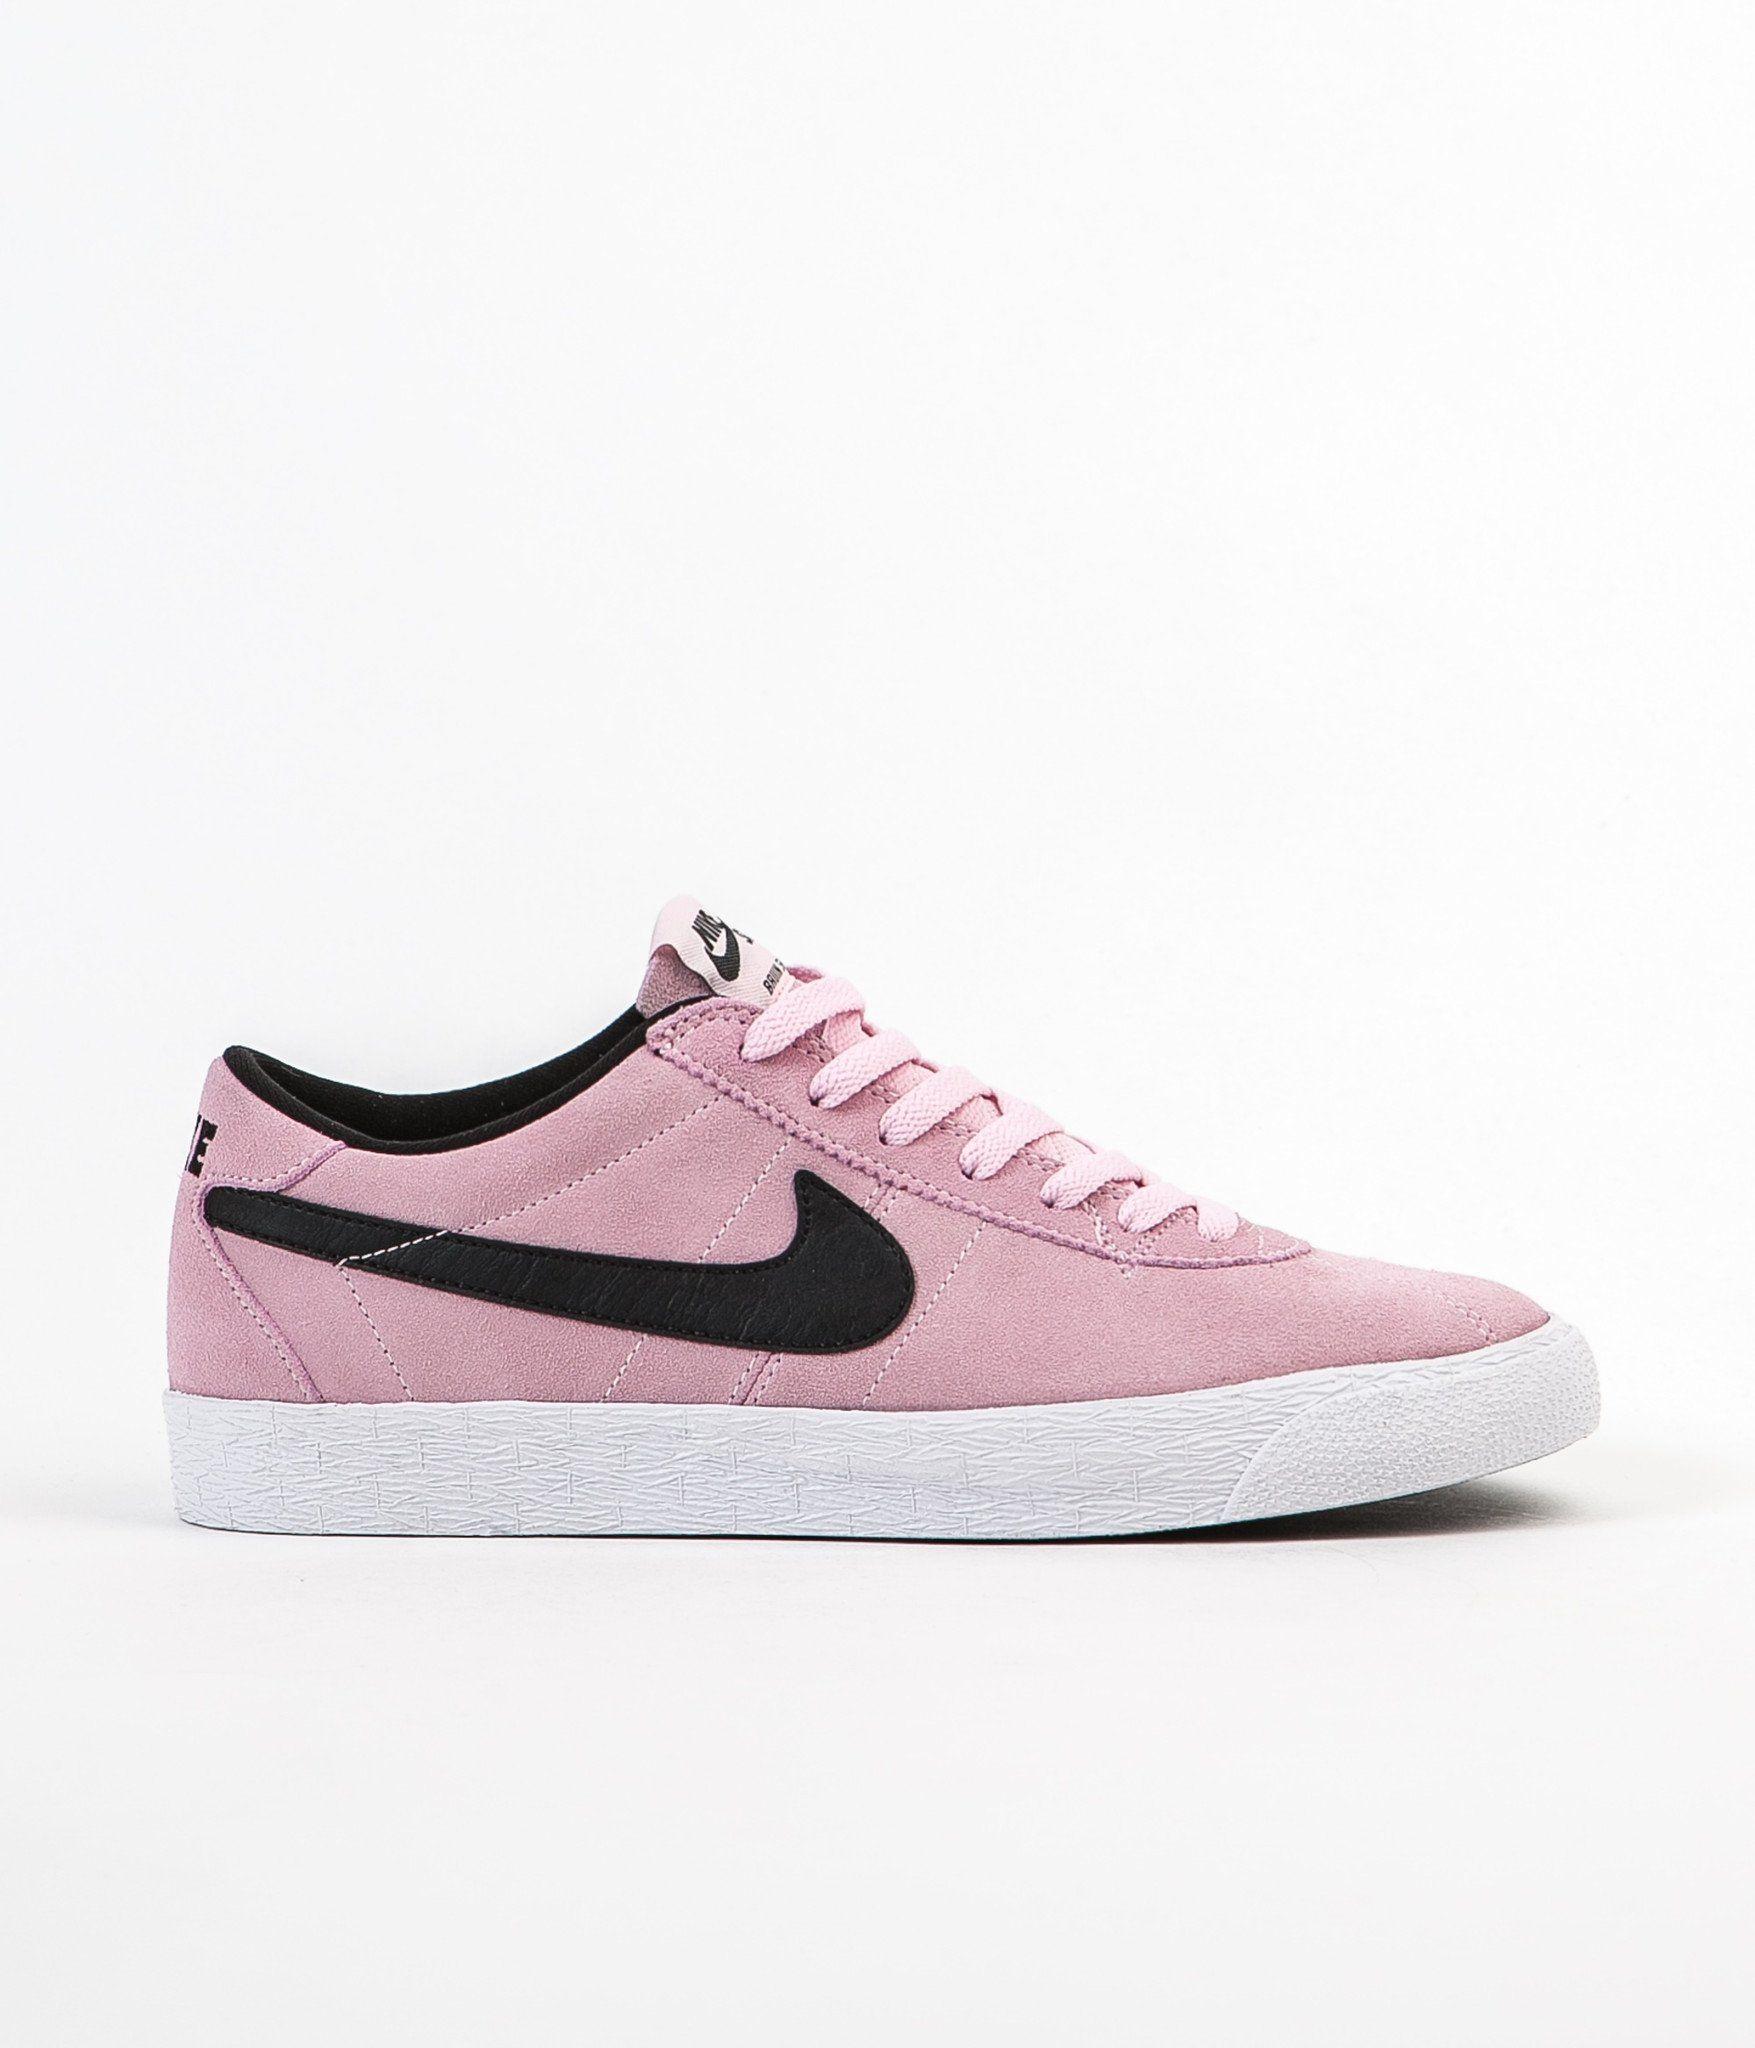 Pink and Black Nike Logo - Nike SB Bruin Premium SE Shoes Pink / Black